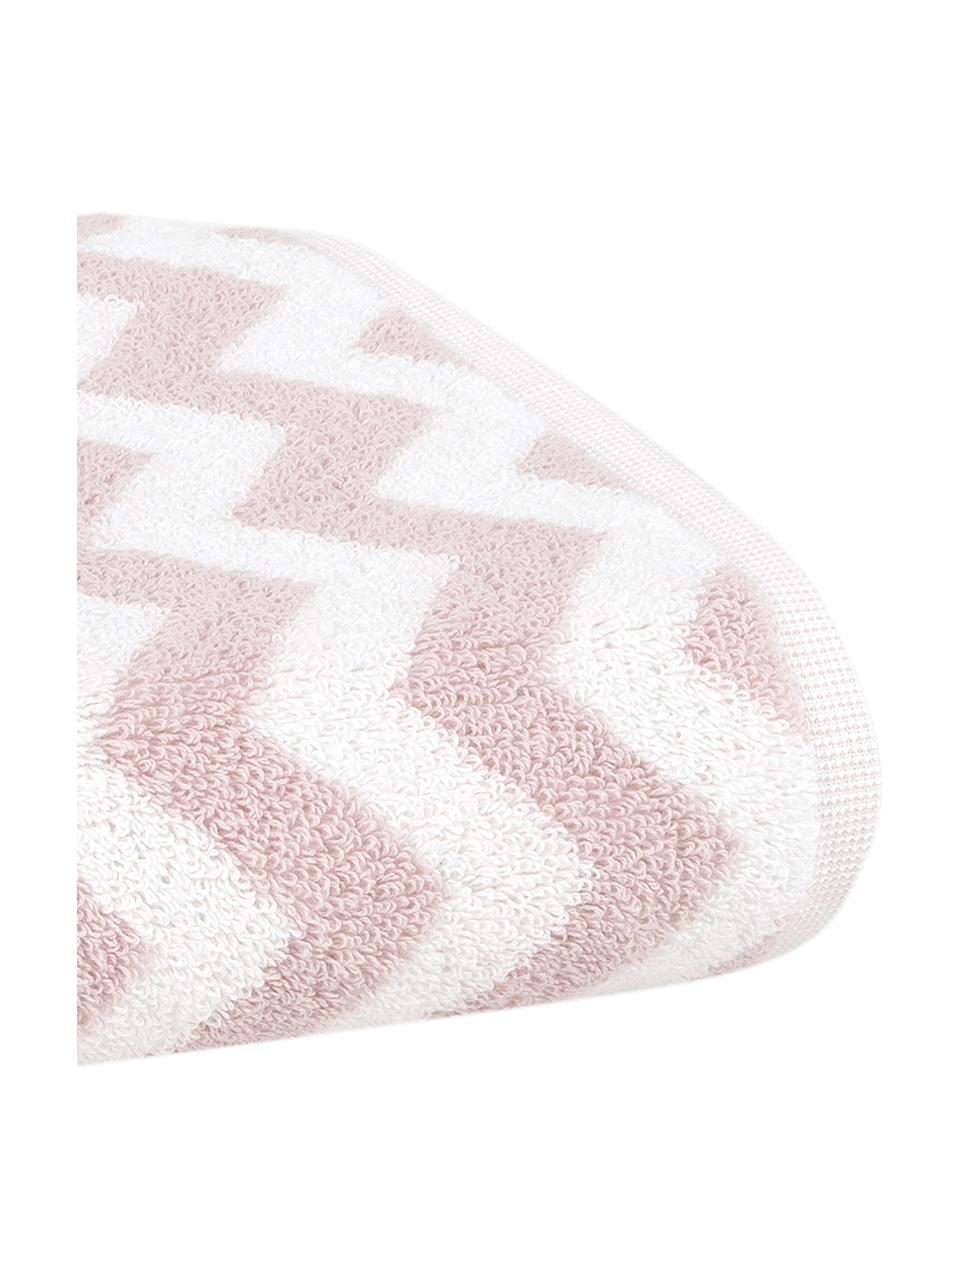 Asciugamano con motivo a zigzag Liv 2 pz, 100% cotone,
qualità media 550 g/m², Rosa, bianco crema, Asciugamano per ospiti, Larg. 30 x Lung. 50 cm, 2 pz